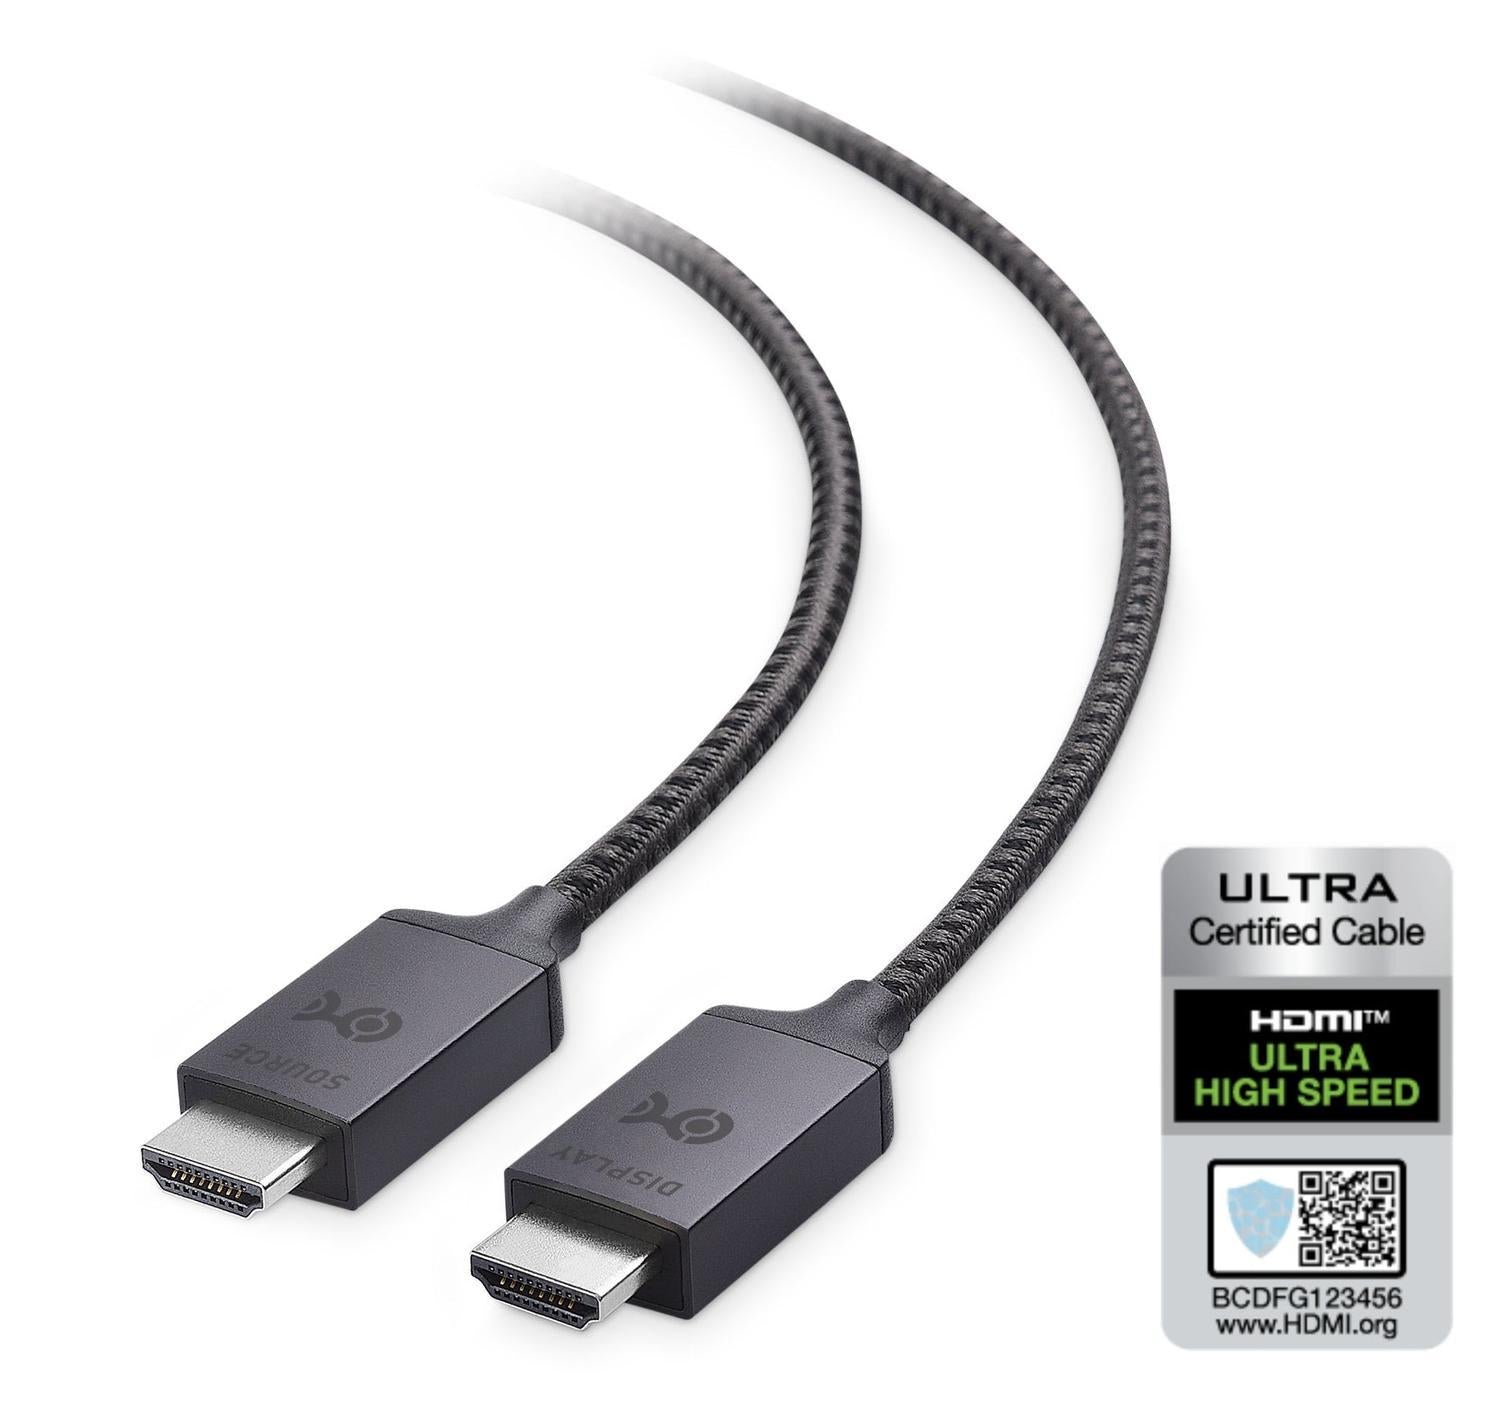 Cable Matters sertifioitu erittäin nopea HDMI2.1 AOC Optinen kuitukaapeli, 10 m, 8K 60 Hz 4K 120 Hz 48 Gb/s Dynamic HDR, eARC, VRR-yhteensop.